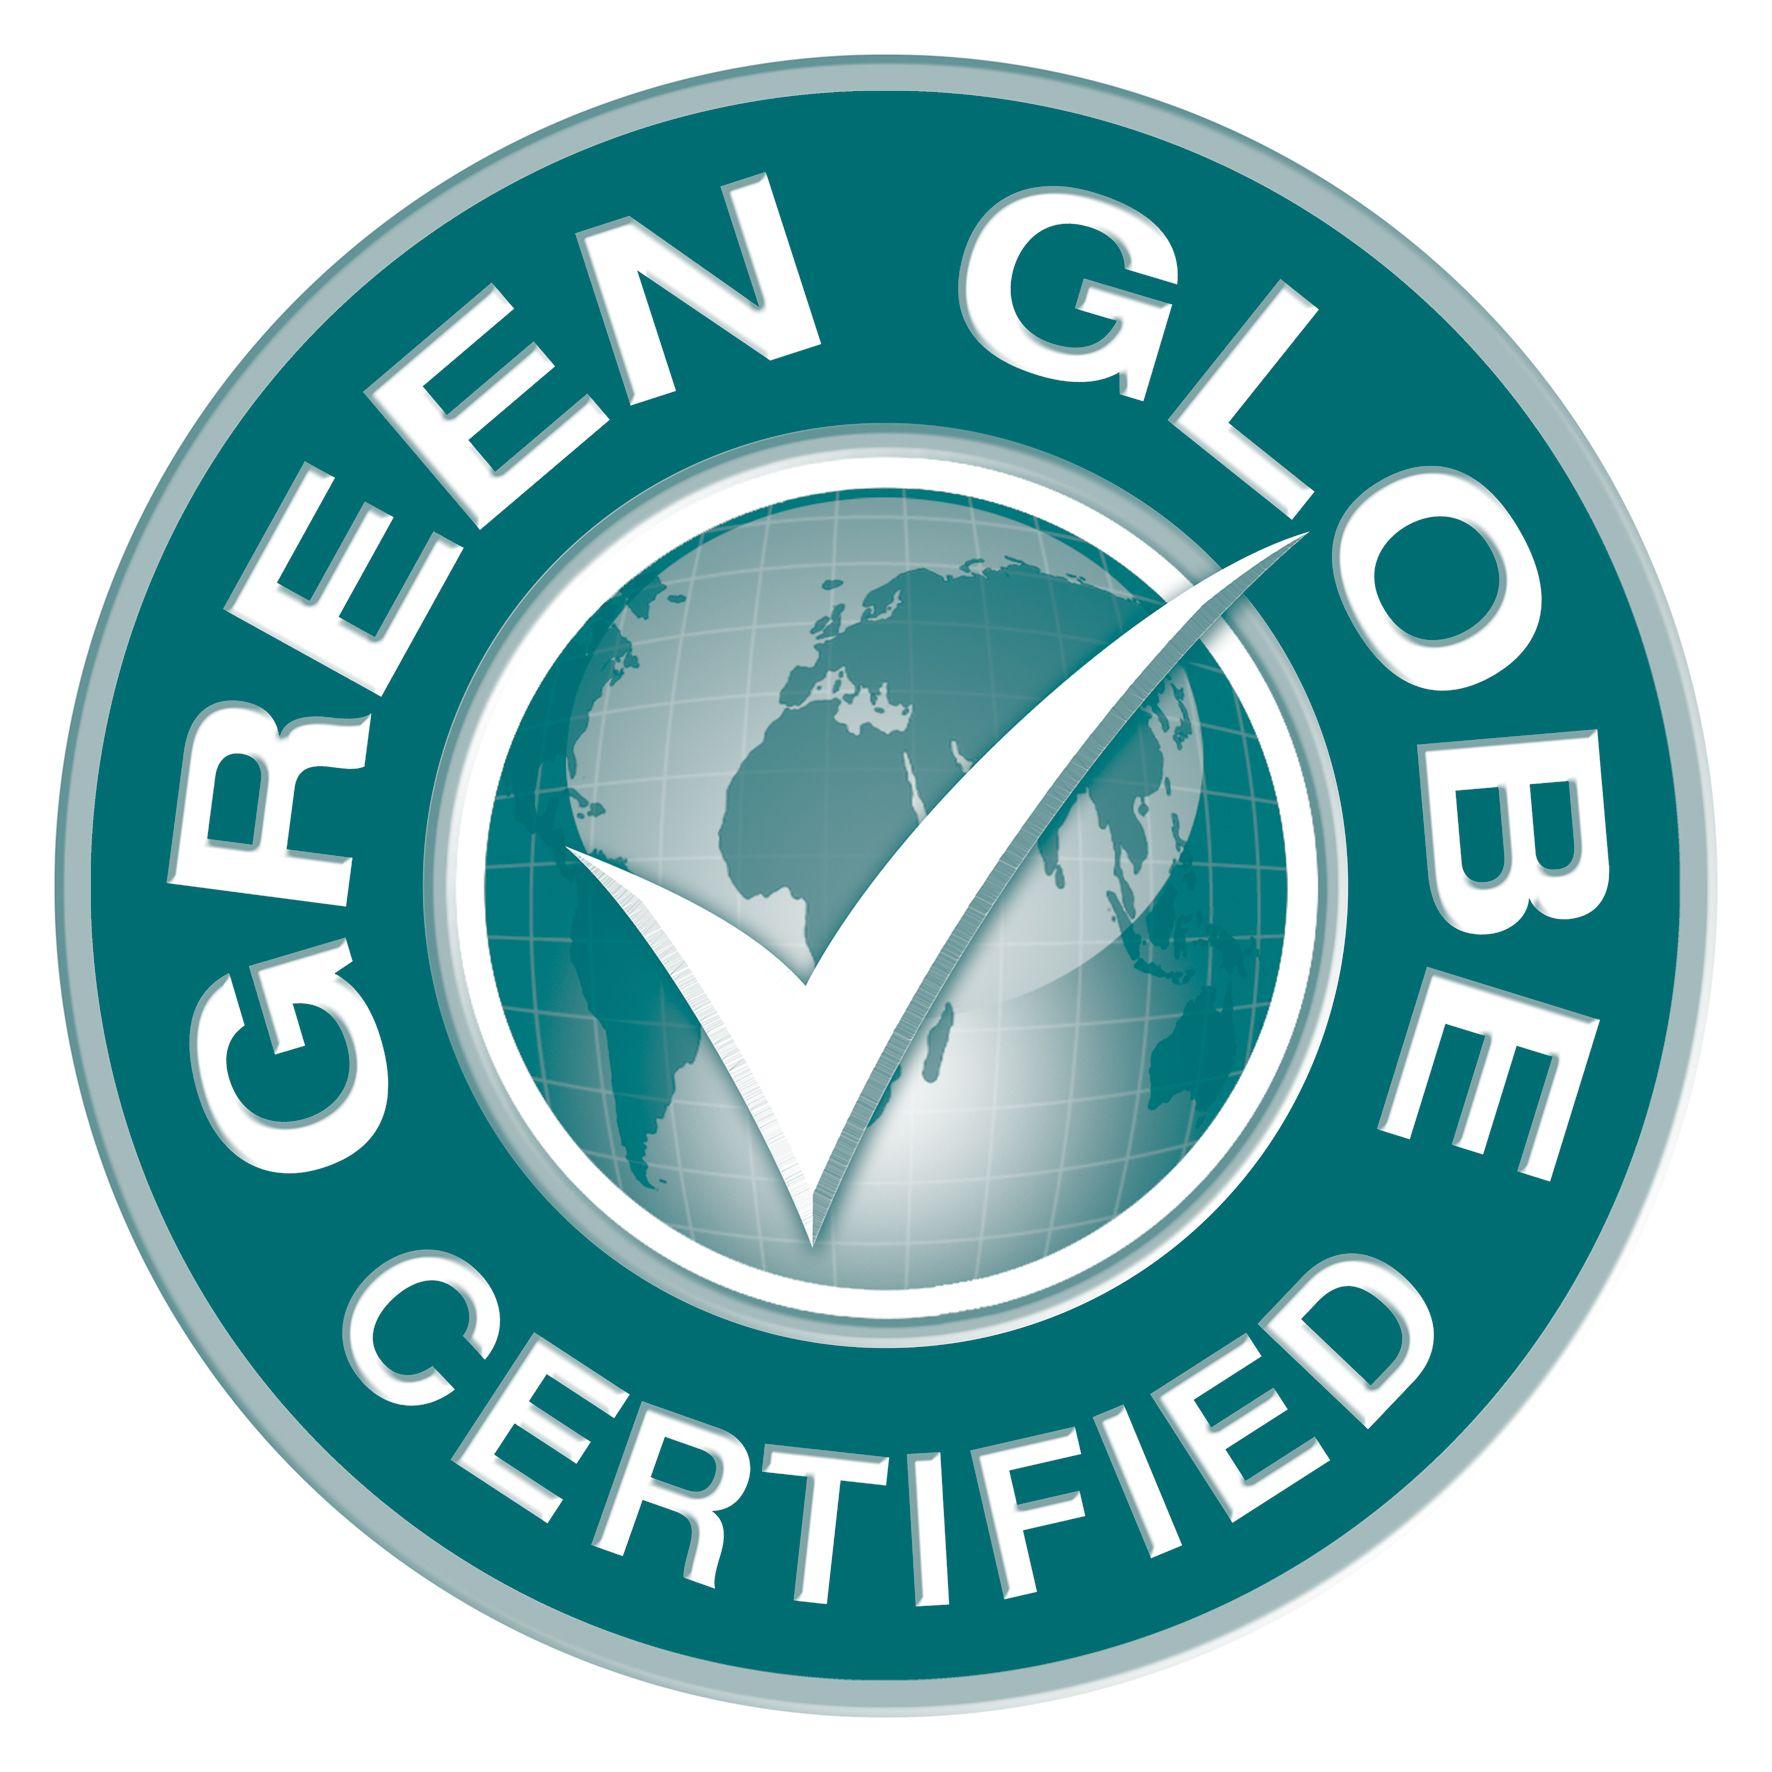 Green Globe Logo - Jamaica Inn is Green Globe certified - Jamaica Inn Blog